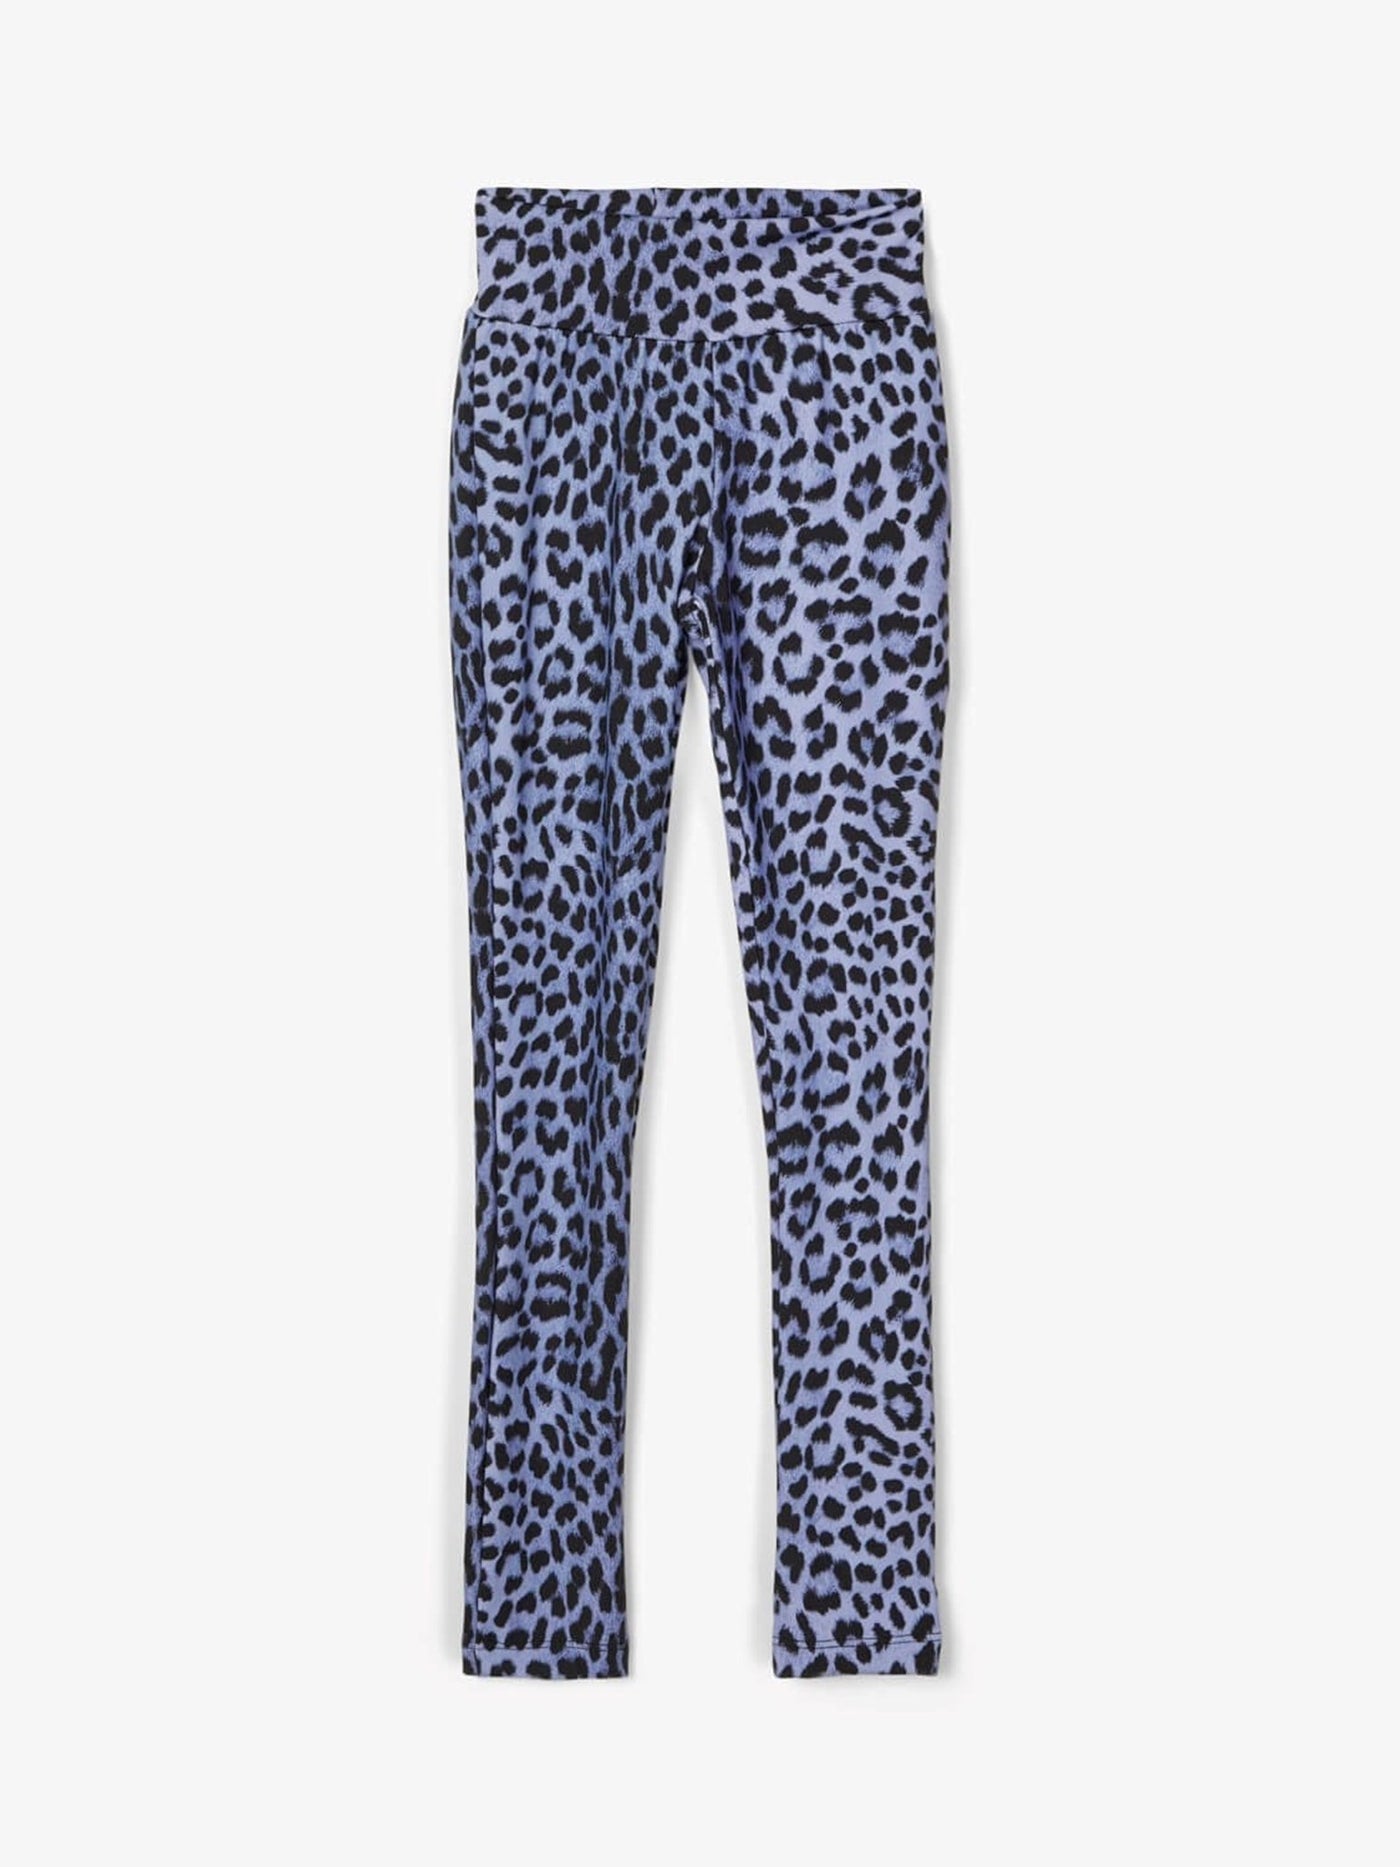 Patterned leggings - Blue leopard - Name It - Blue 2